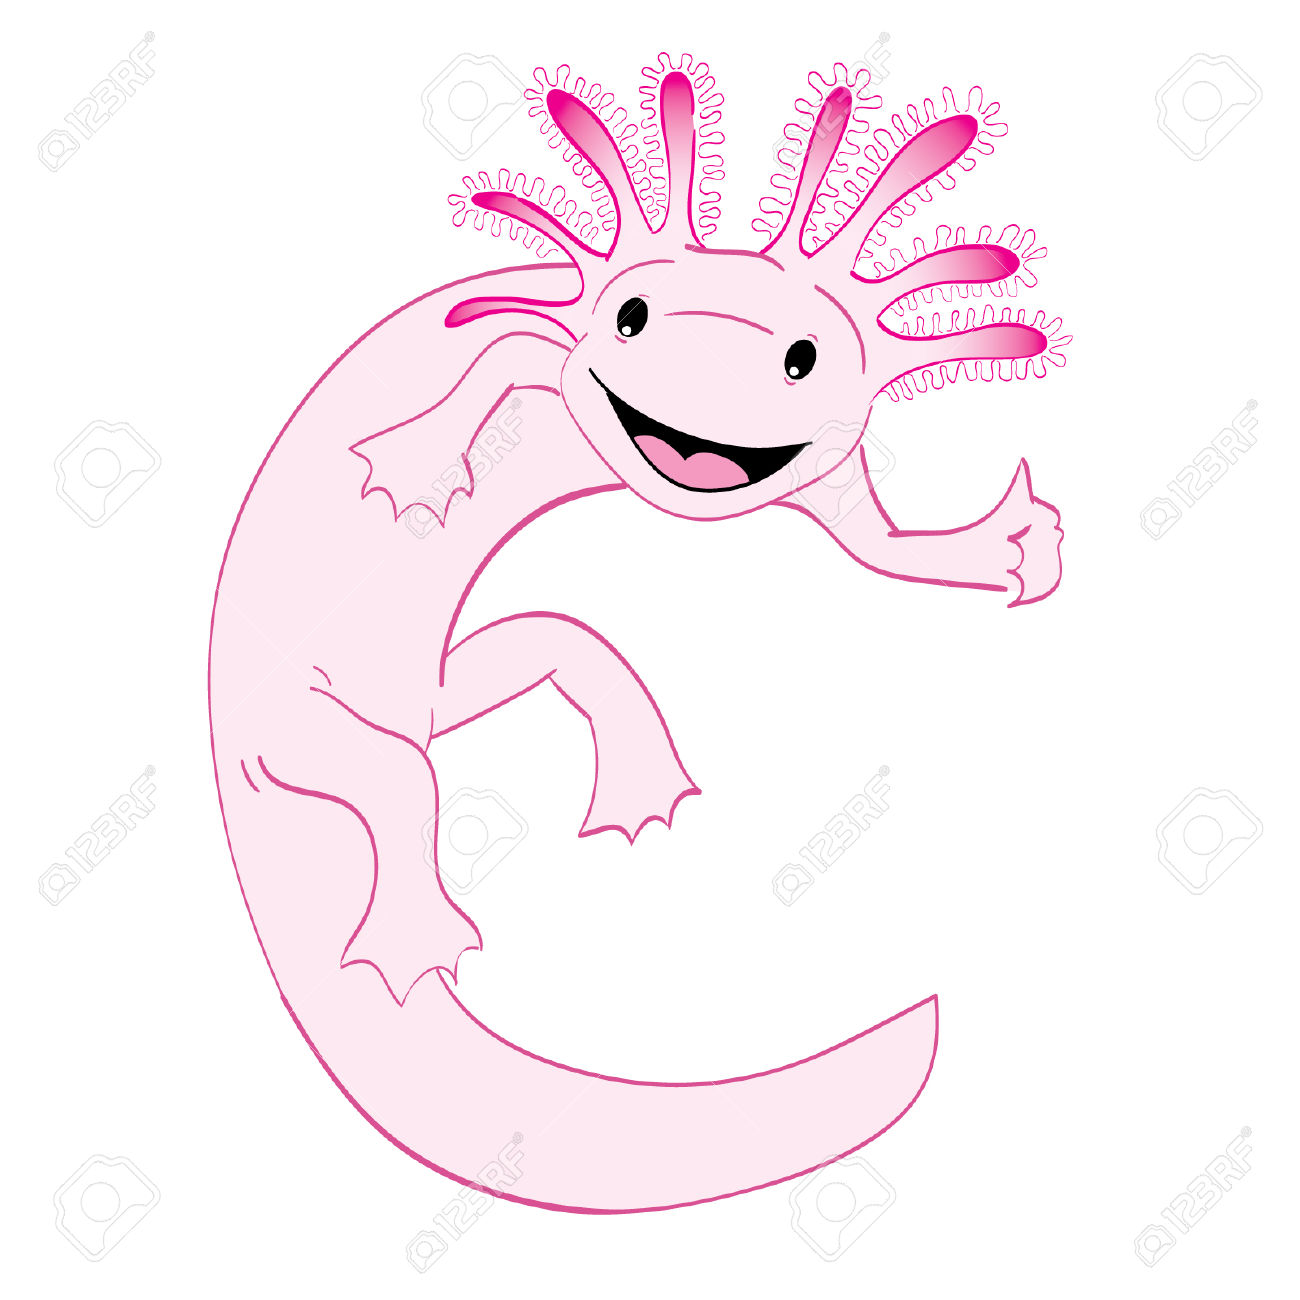 Axolotl clipart #16, Download drawings